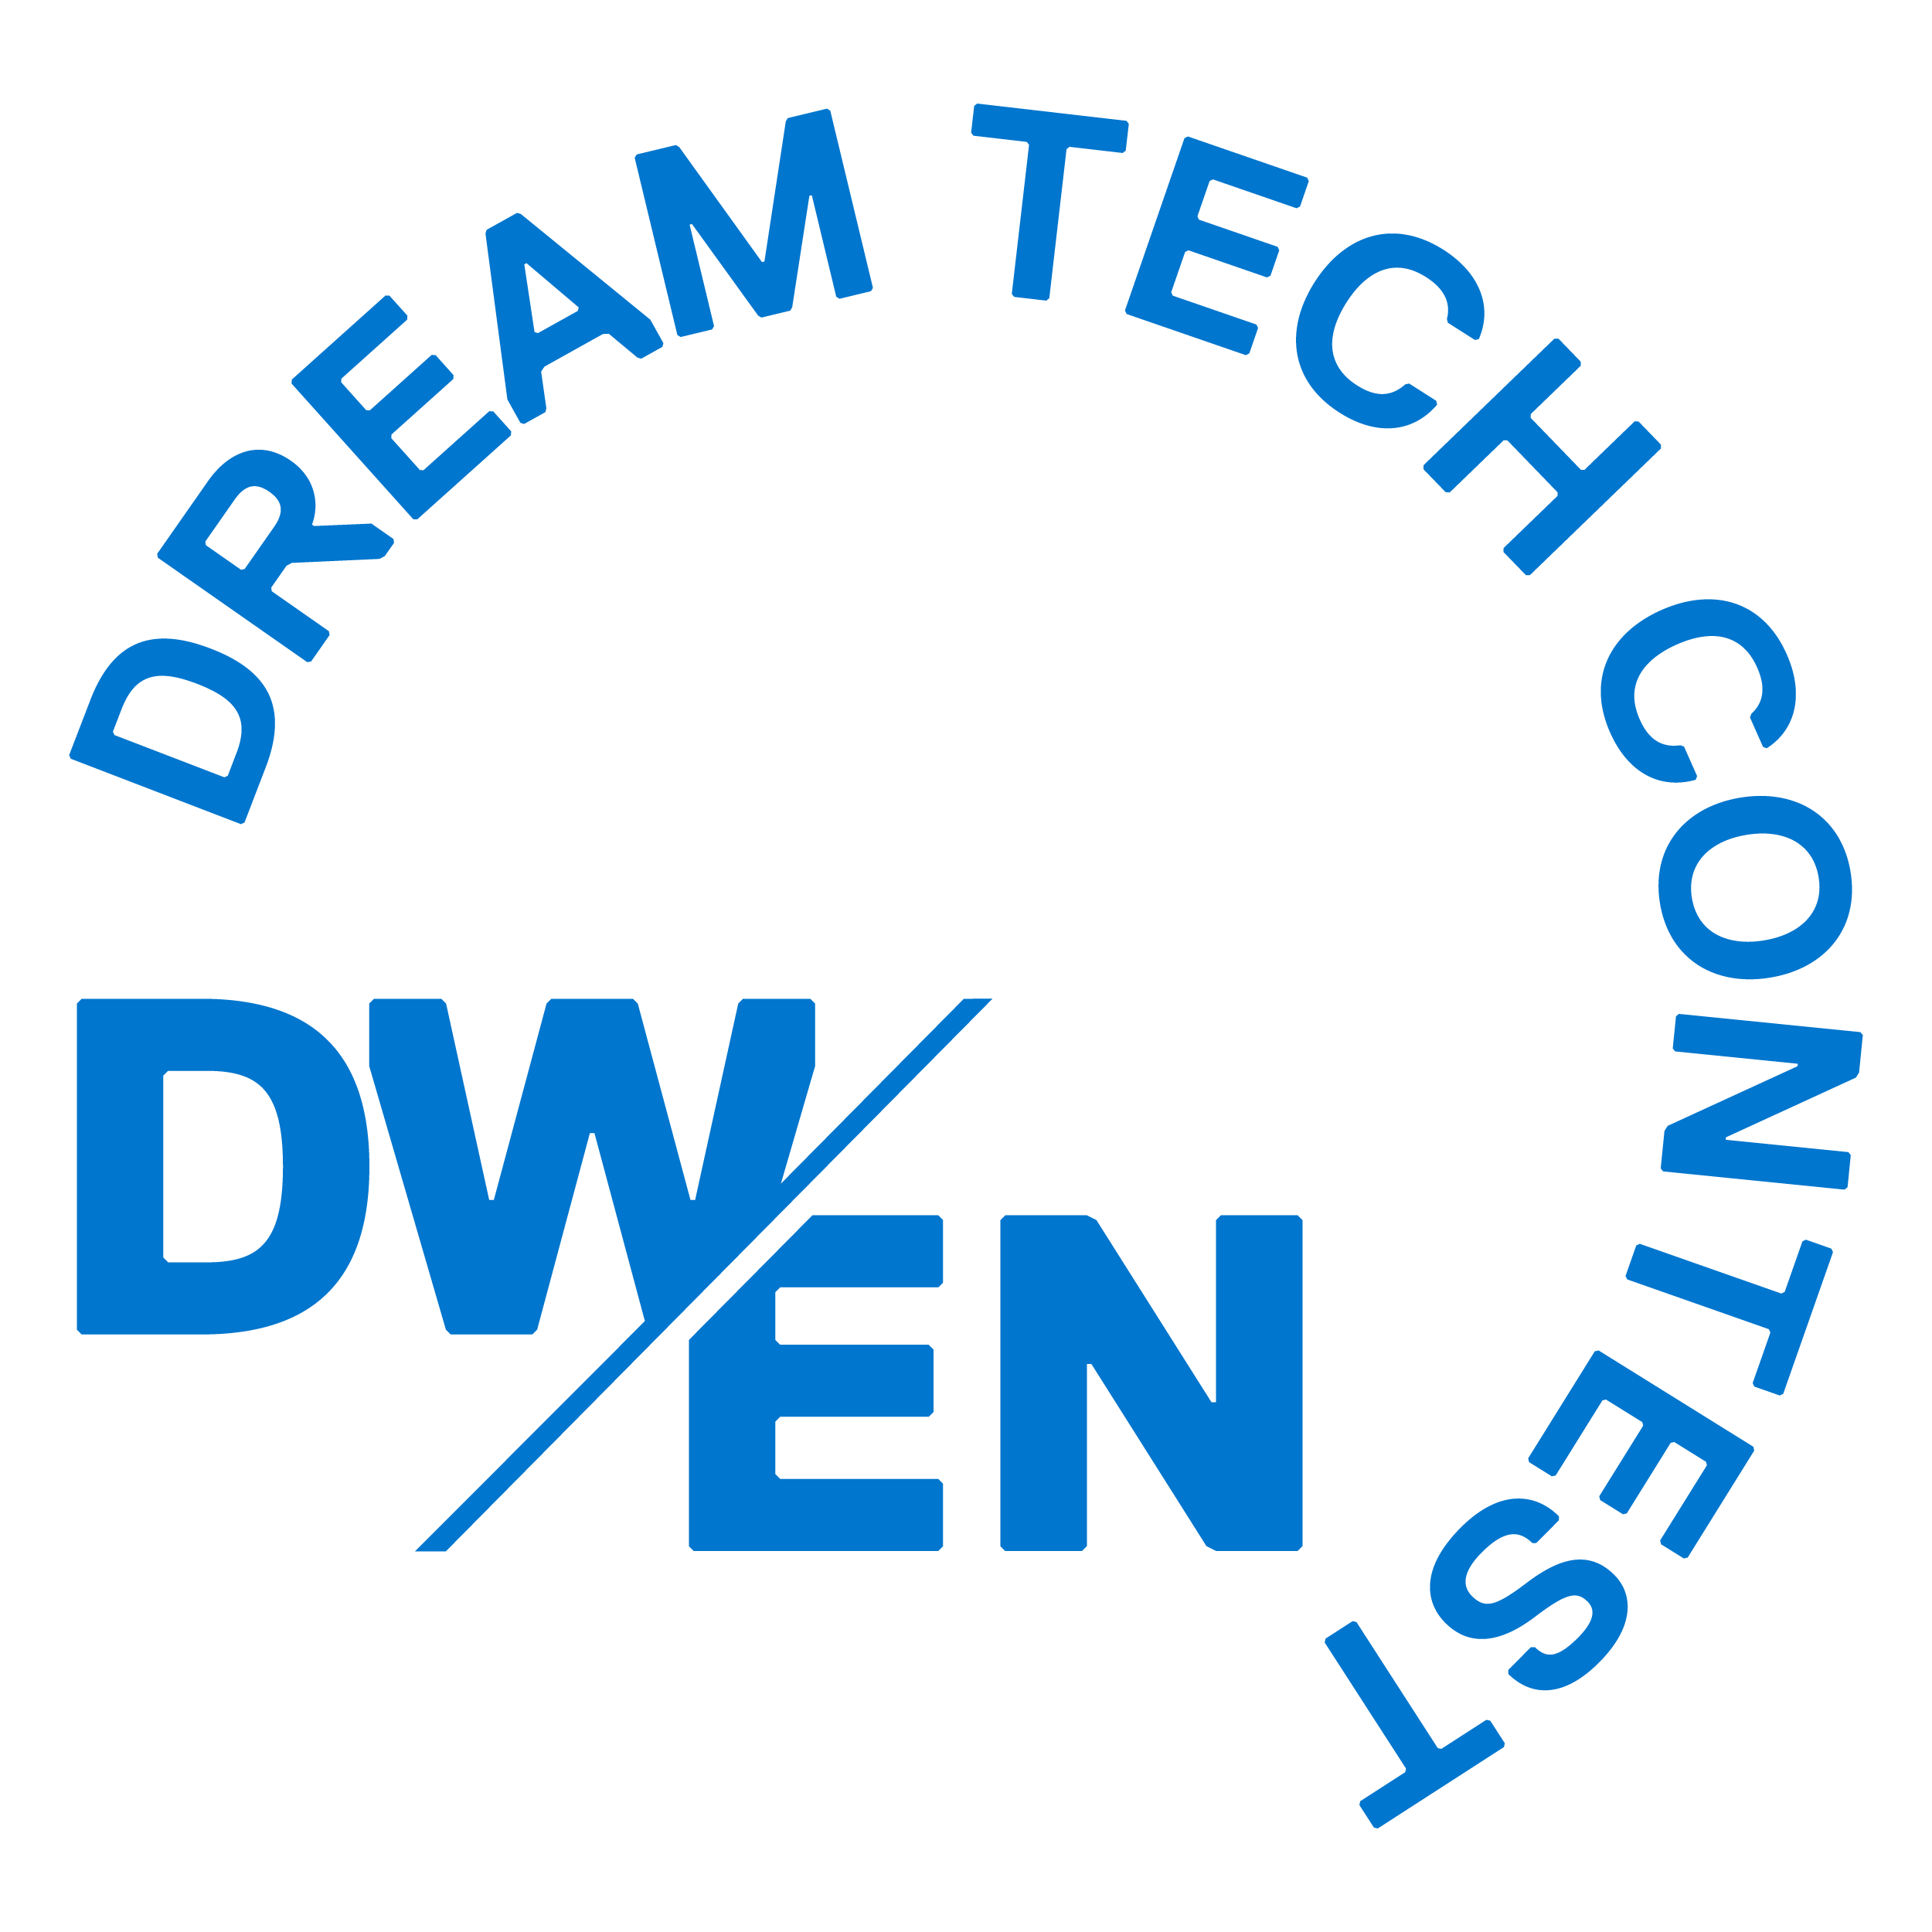 DWEN Dream Tech Contest_Logo_Blue